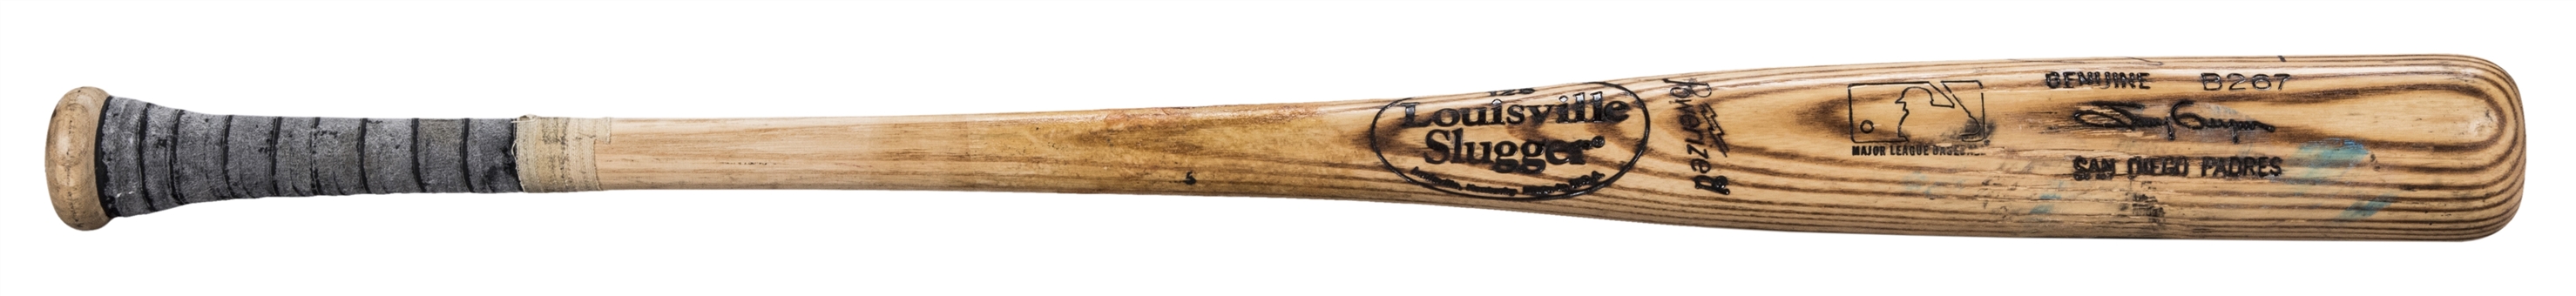 1999 Tony Gwynn Game Used & Signed Louisville Slugger B267 Model Bat (PSA/DNA GU 9 & JSA)